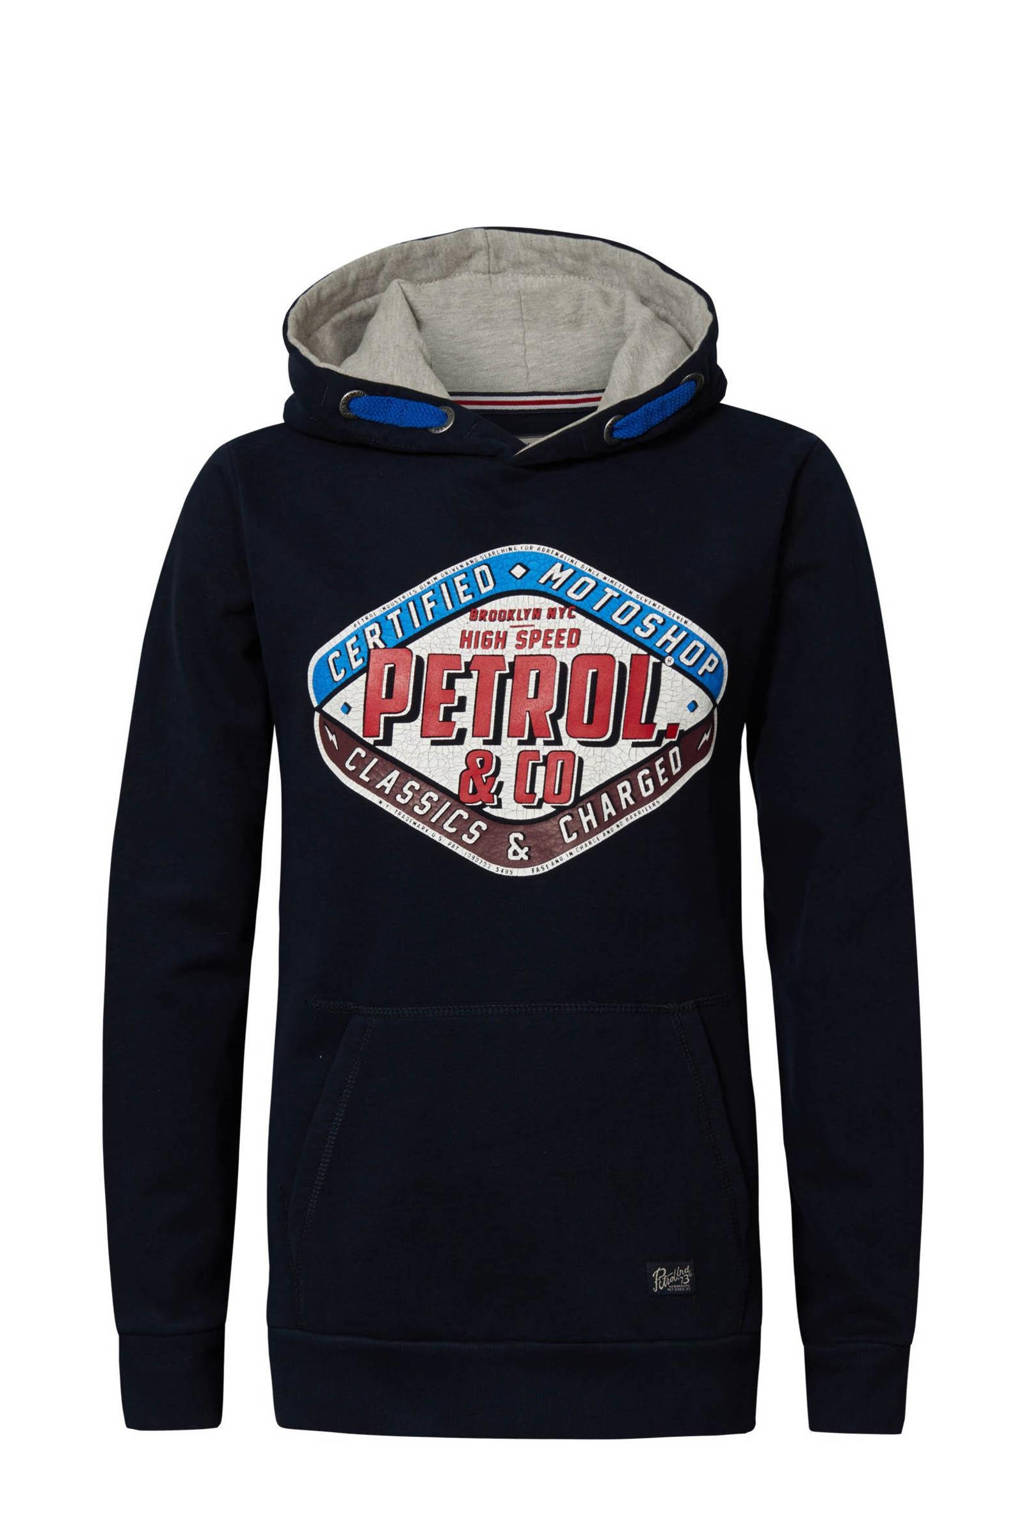 Donkerblauwe jongens Petrol Industries hoodie van sweat materiaal met logo dessin, lange mouwen en capuchon